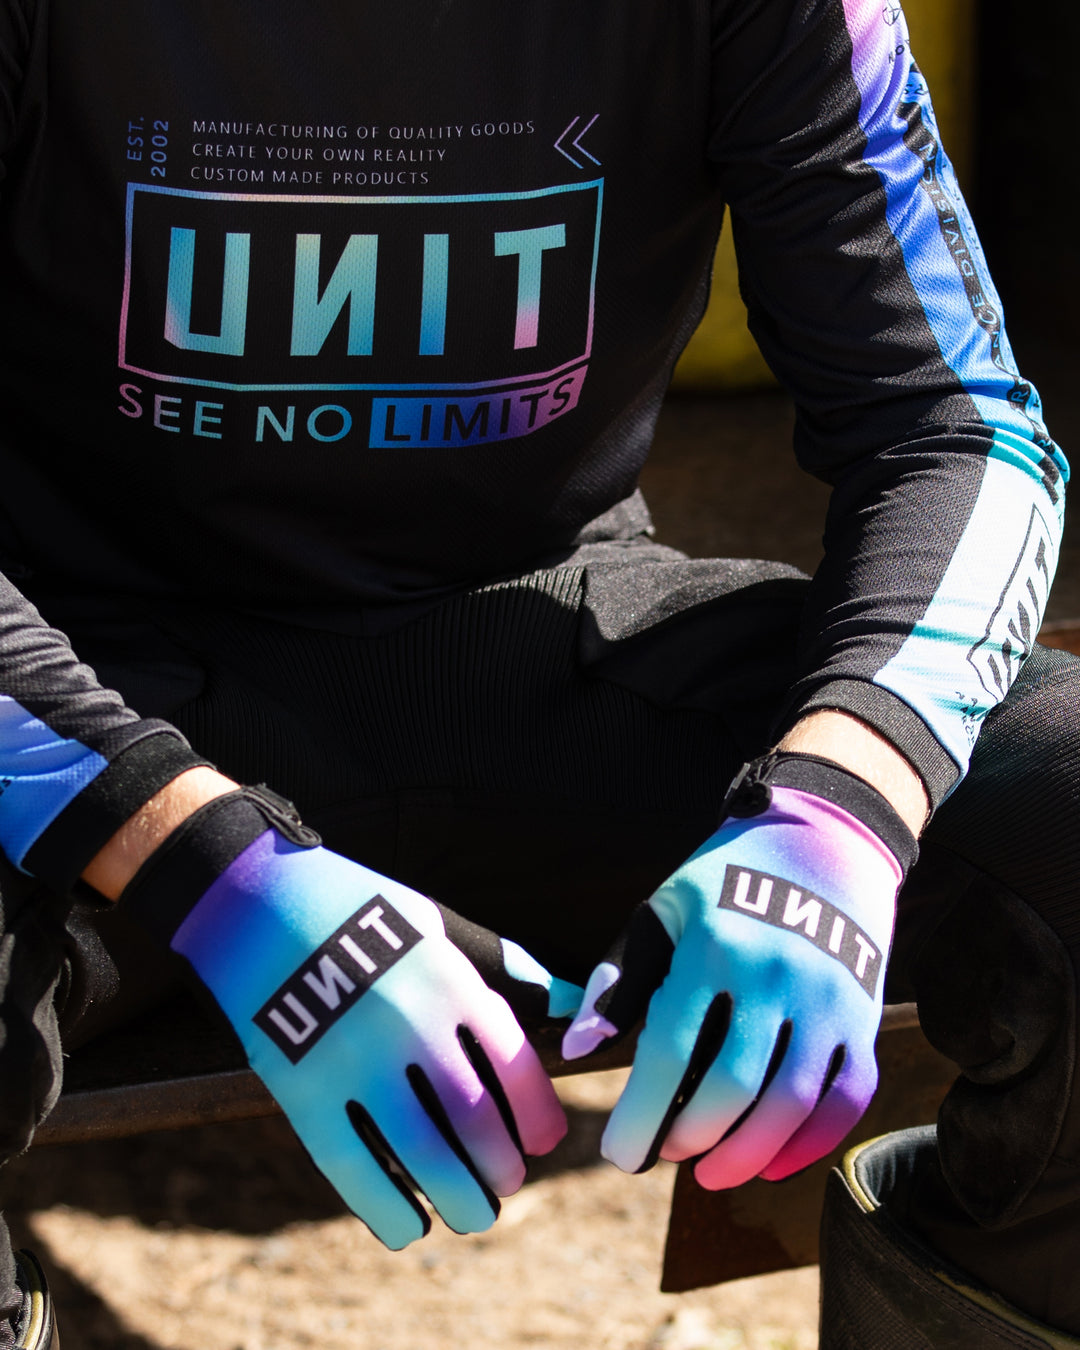 UNIT Vista Youth / Kids Gloves